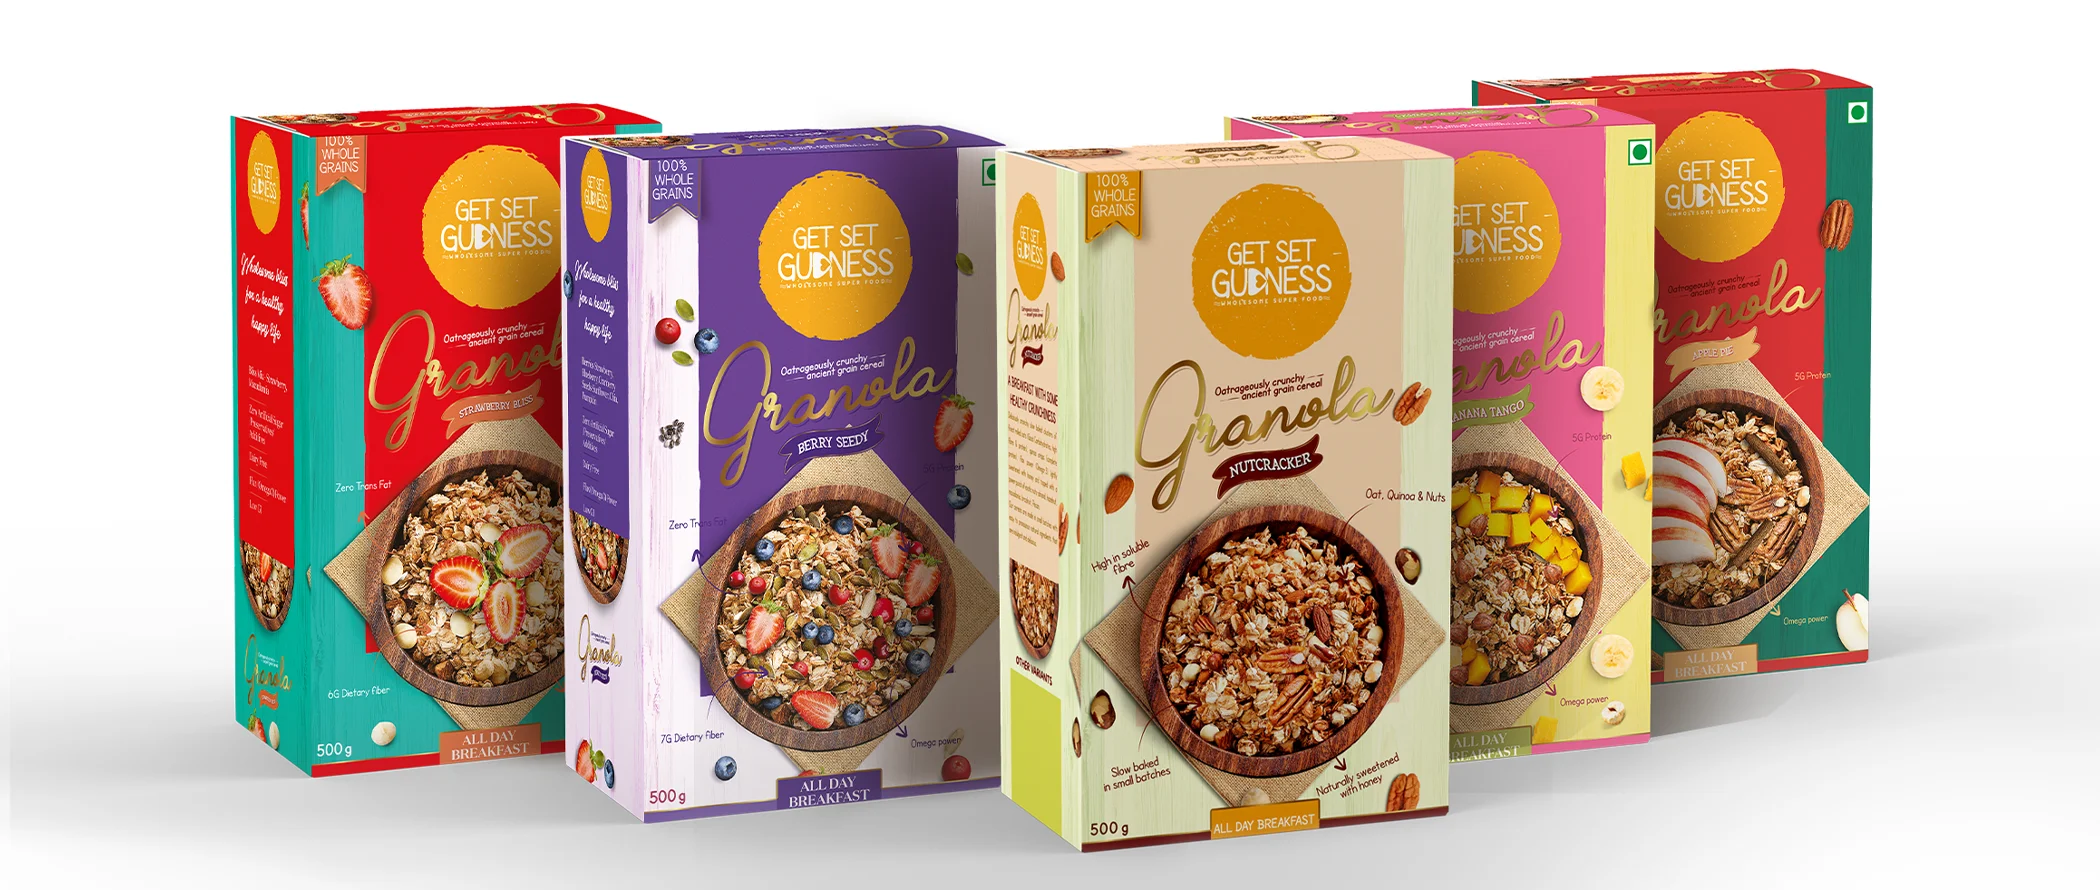 Get set gudeness healthy food Box packaging design copy 7